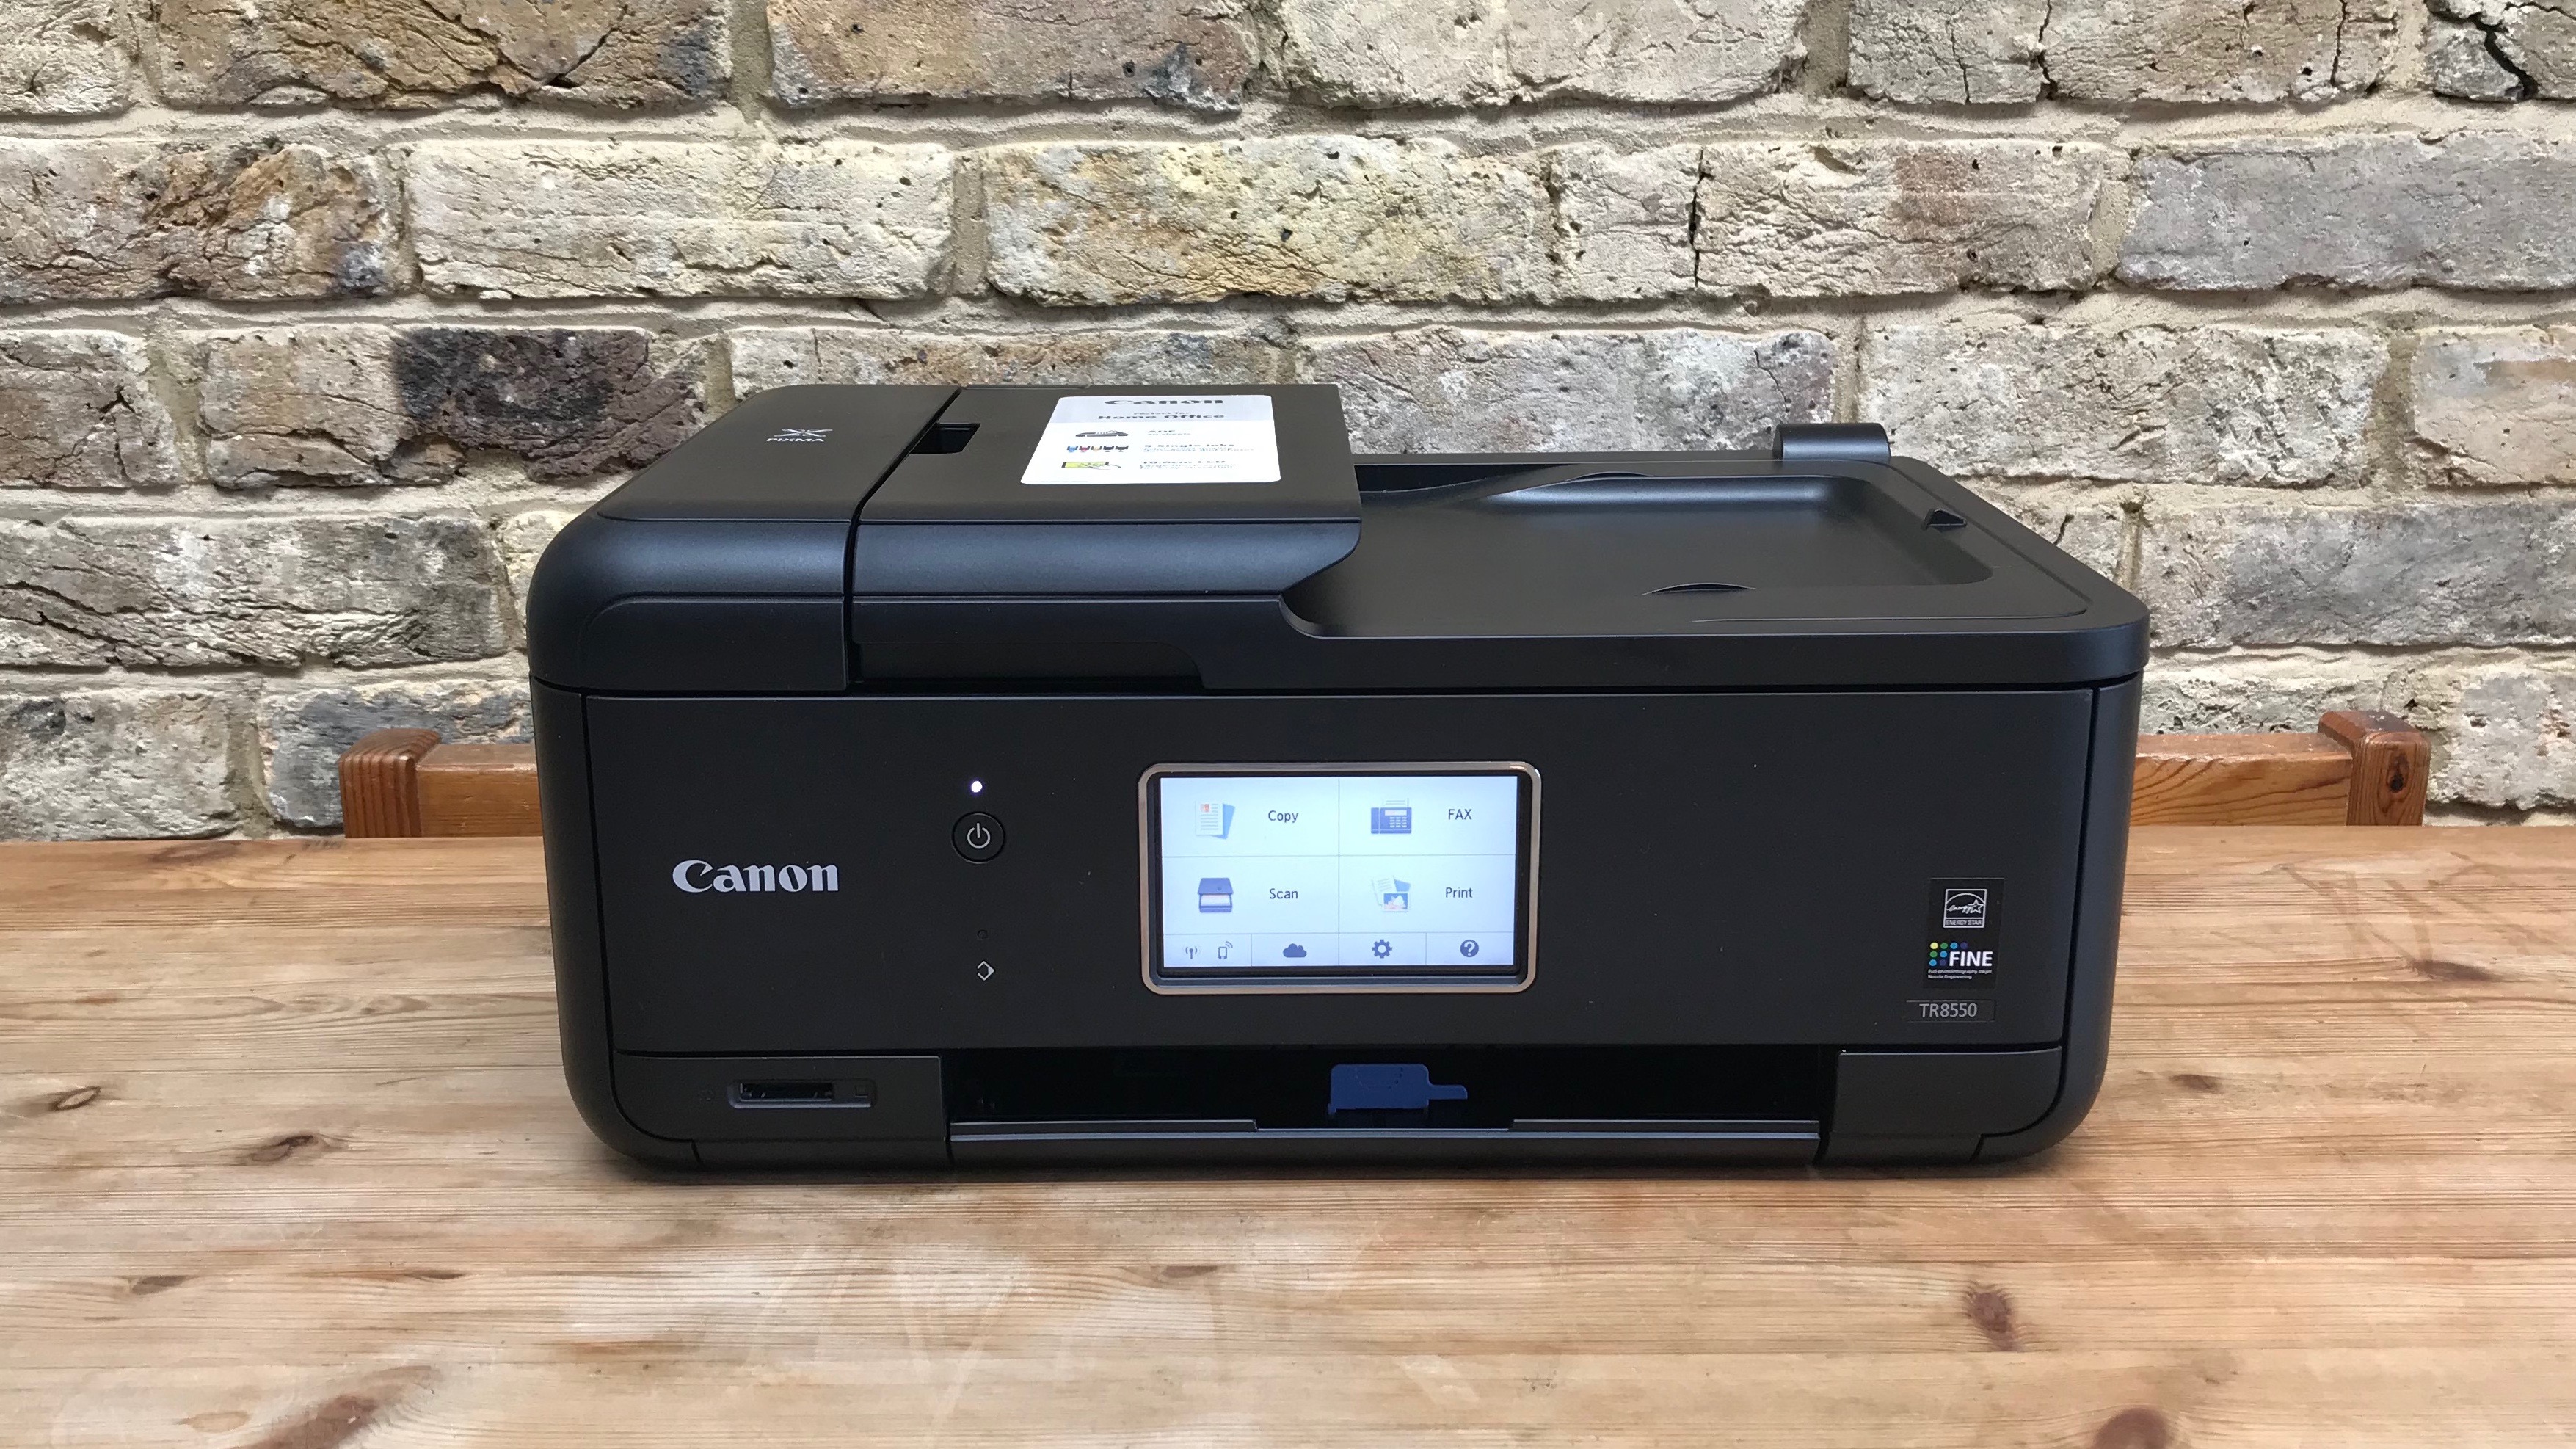 impresora multifuncional canon pixma k10356